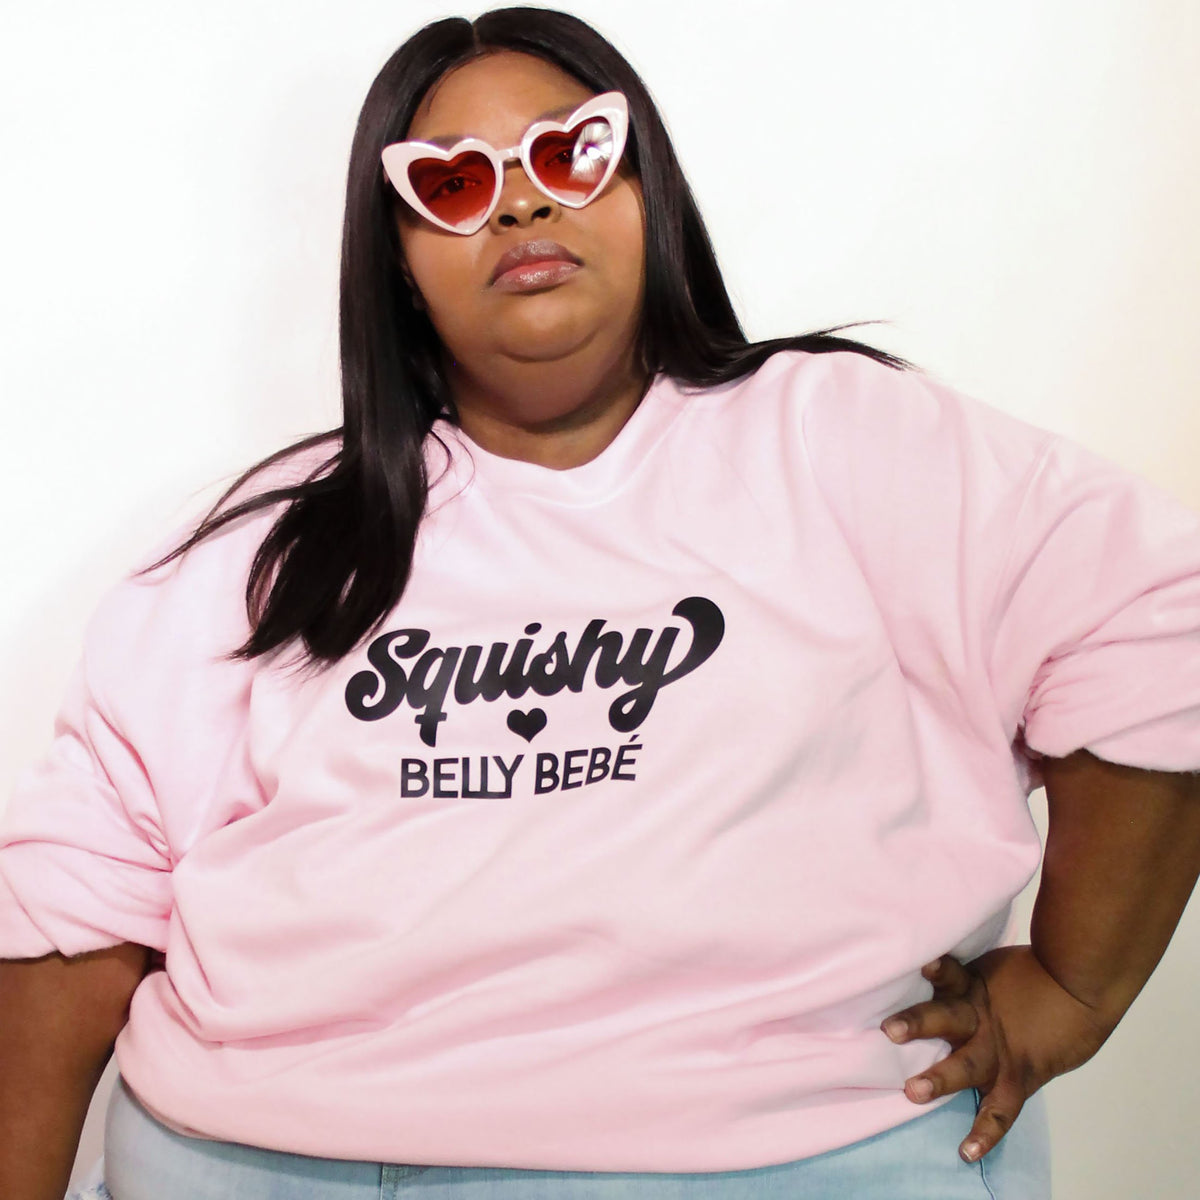 Squishy Belly Bebe Sweatshirt   Fat Mermaids  - Fat Mermaids 